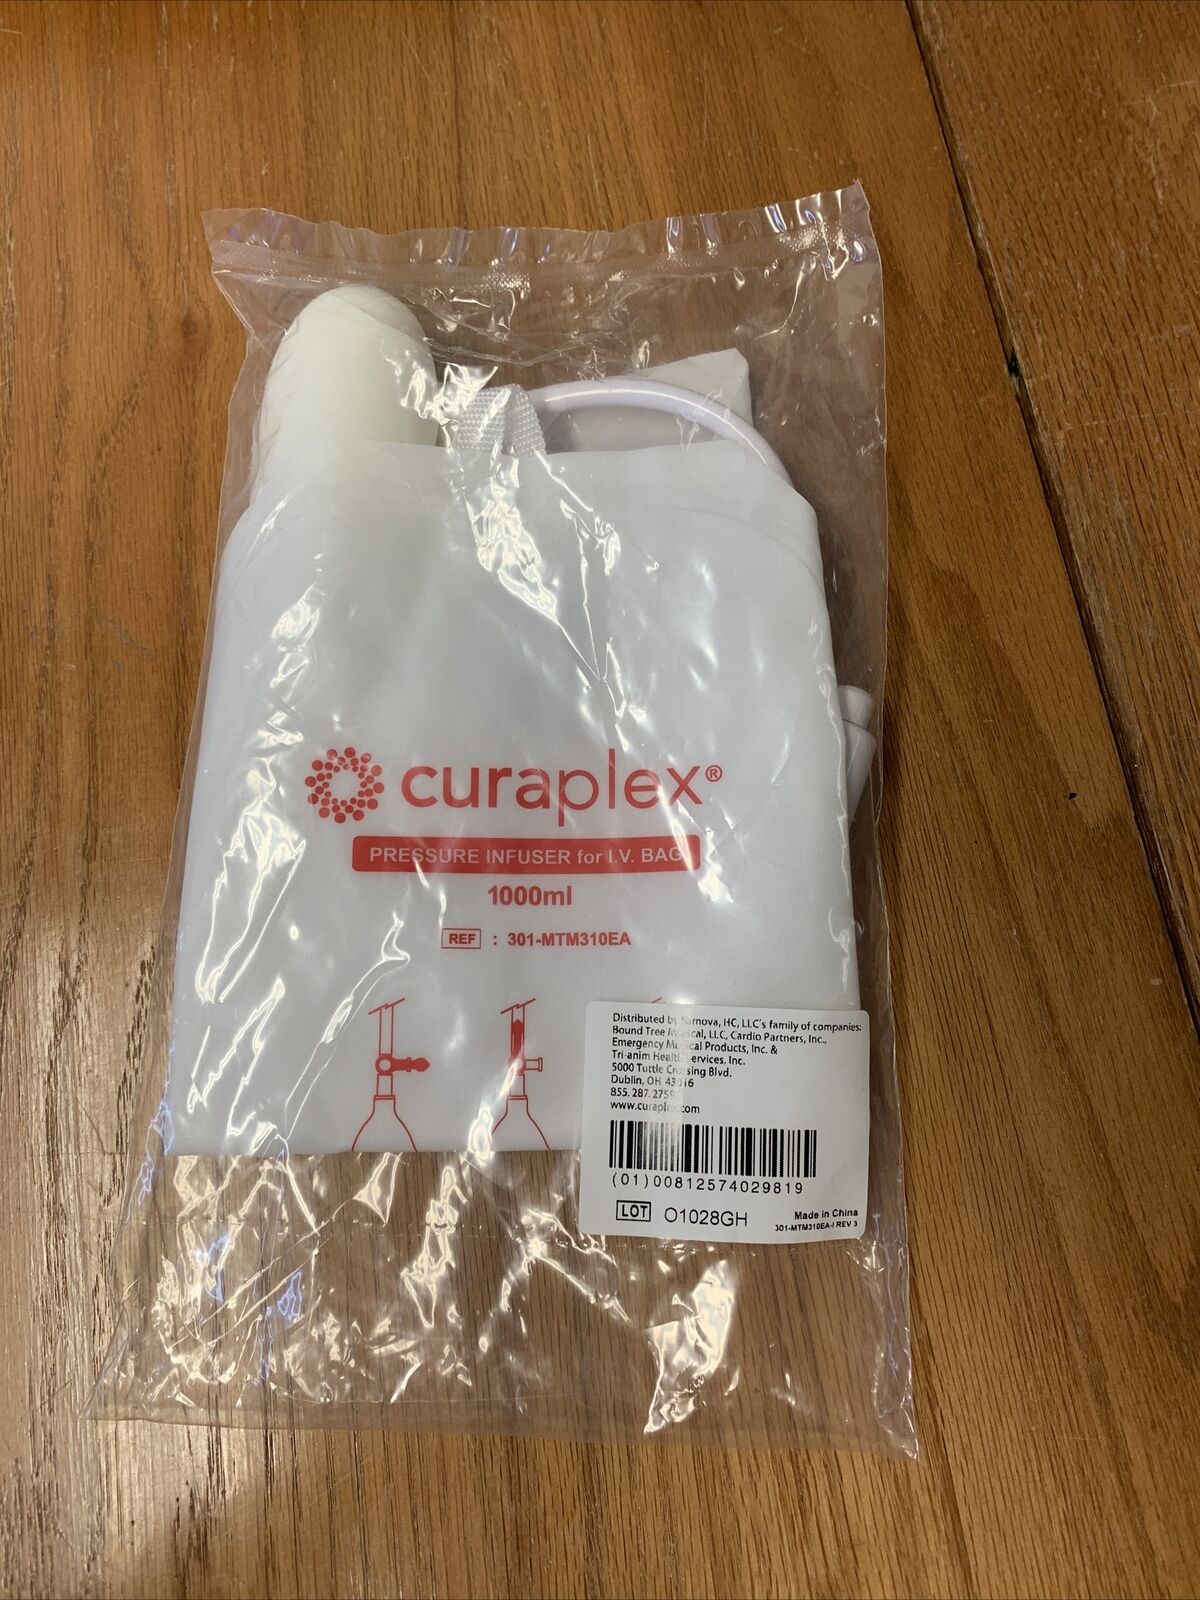 Curaplex Pressure Infuser For I.v. Bag 1000ml